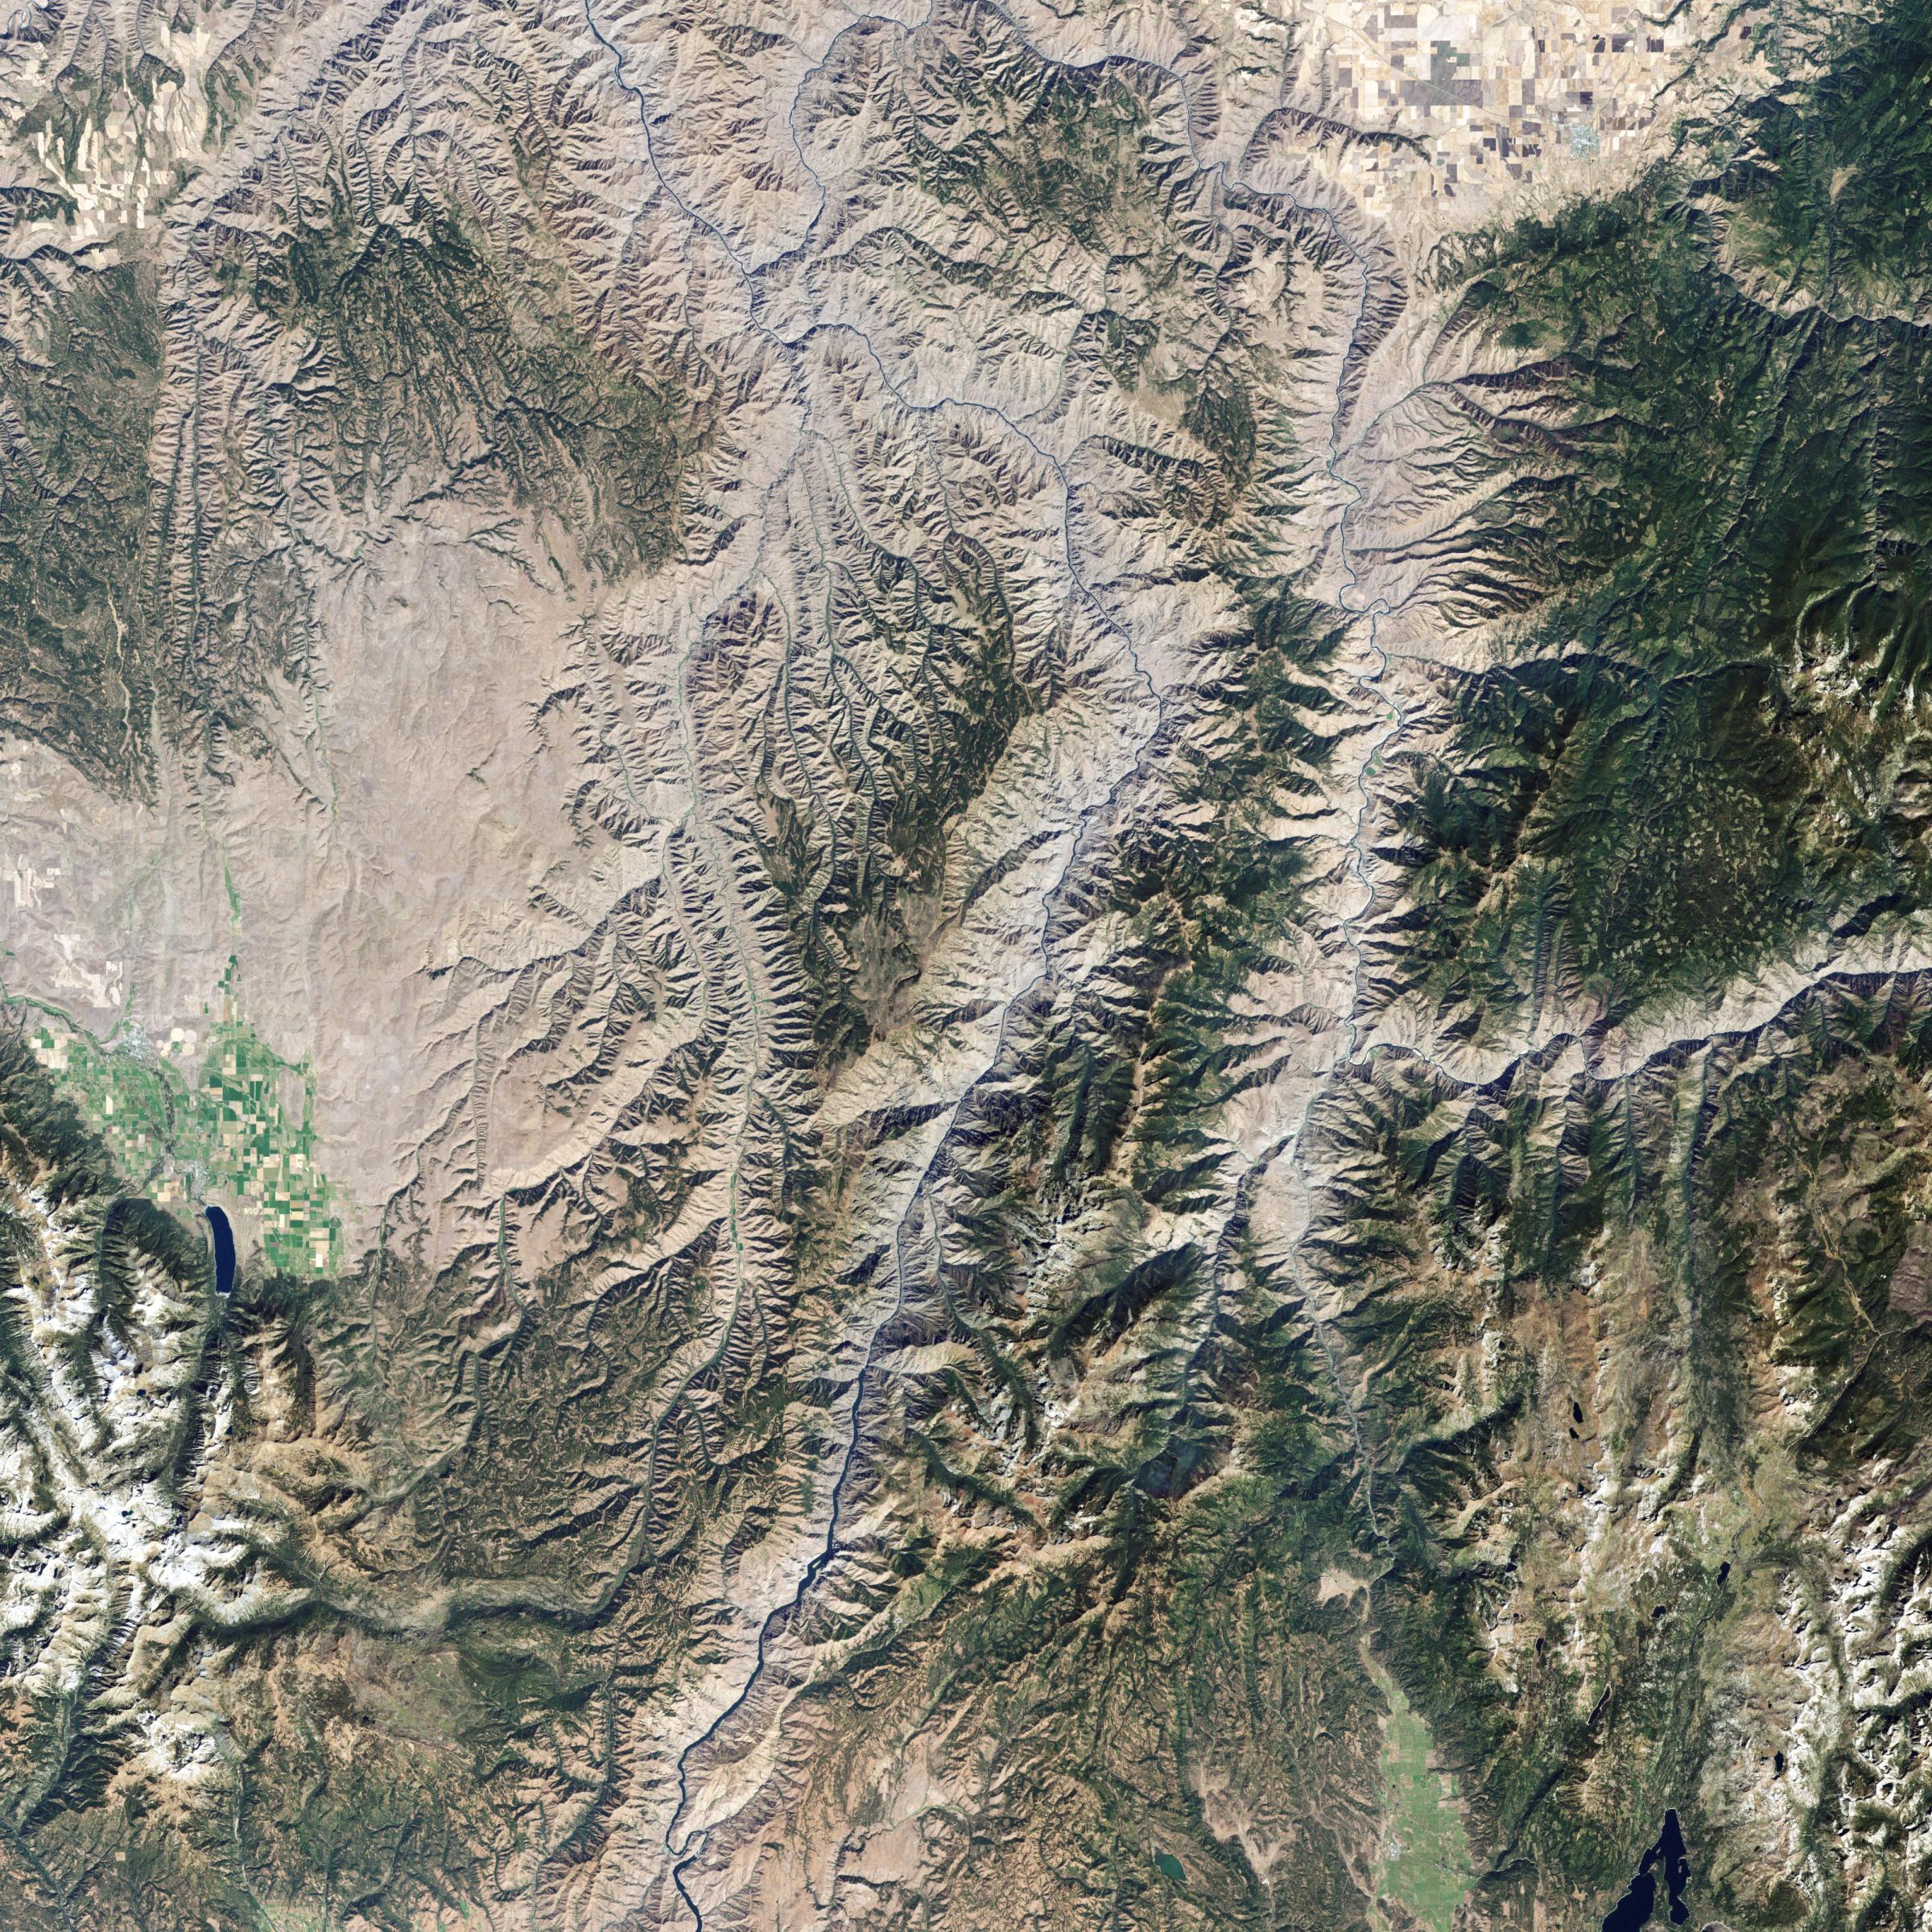 NASA - Hells Canyon National Recreation Area